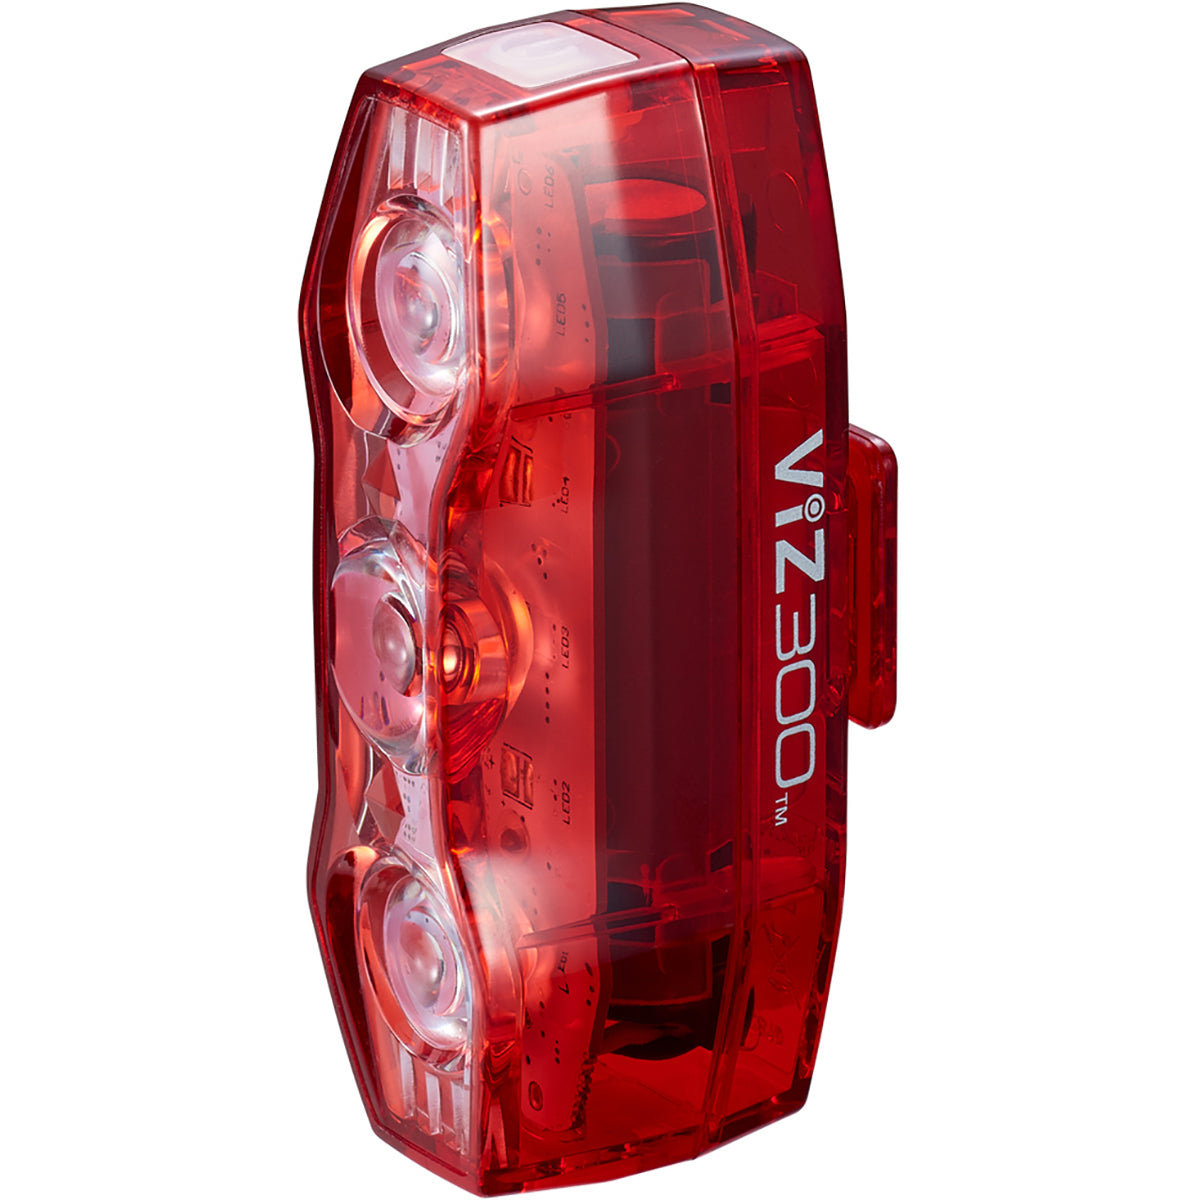 CatEye ViZ300 Wireless Rechargeable Rear Safety Light Cateye